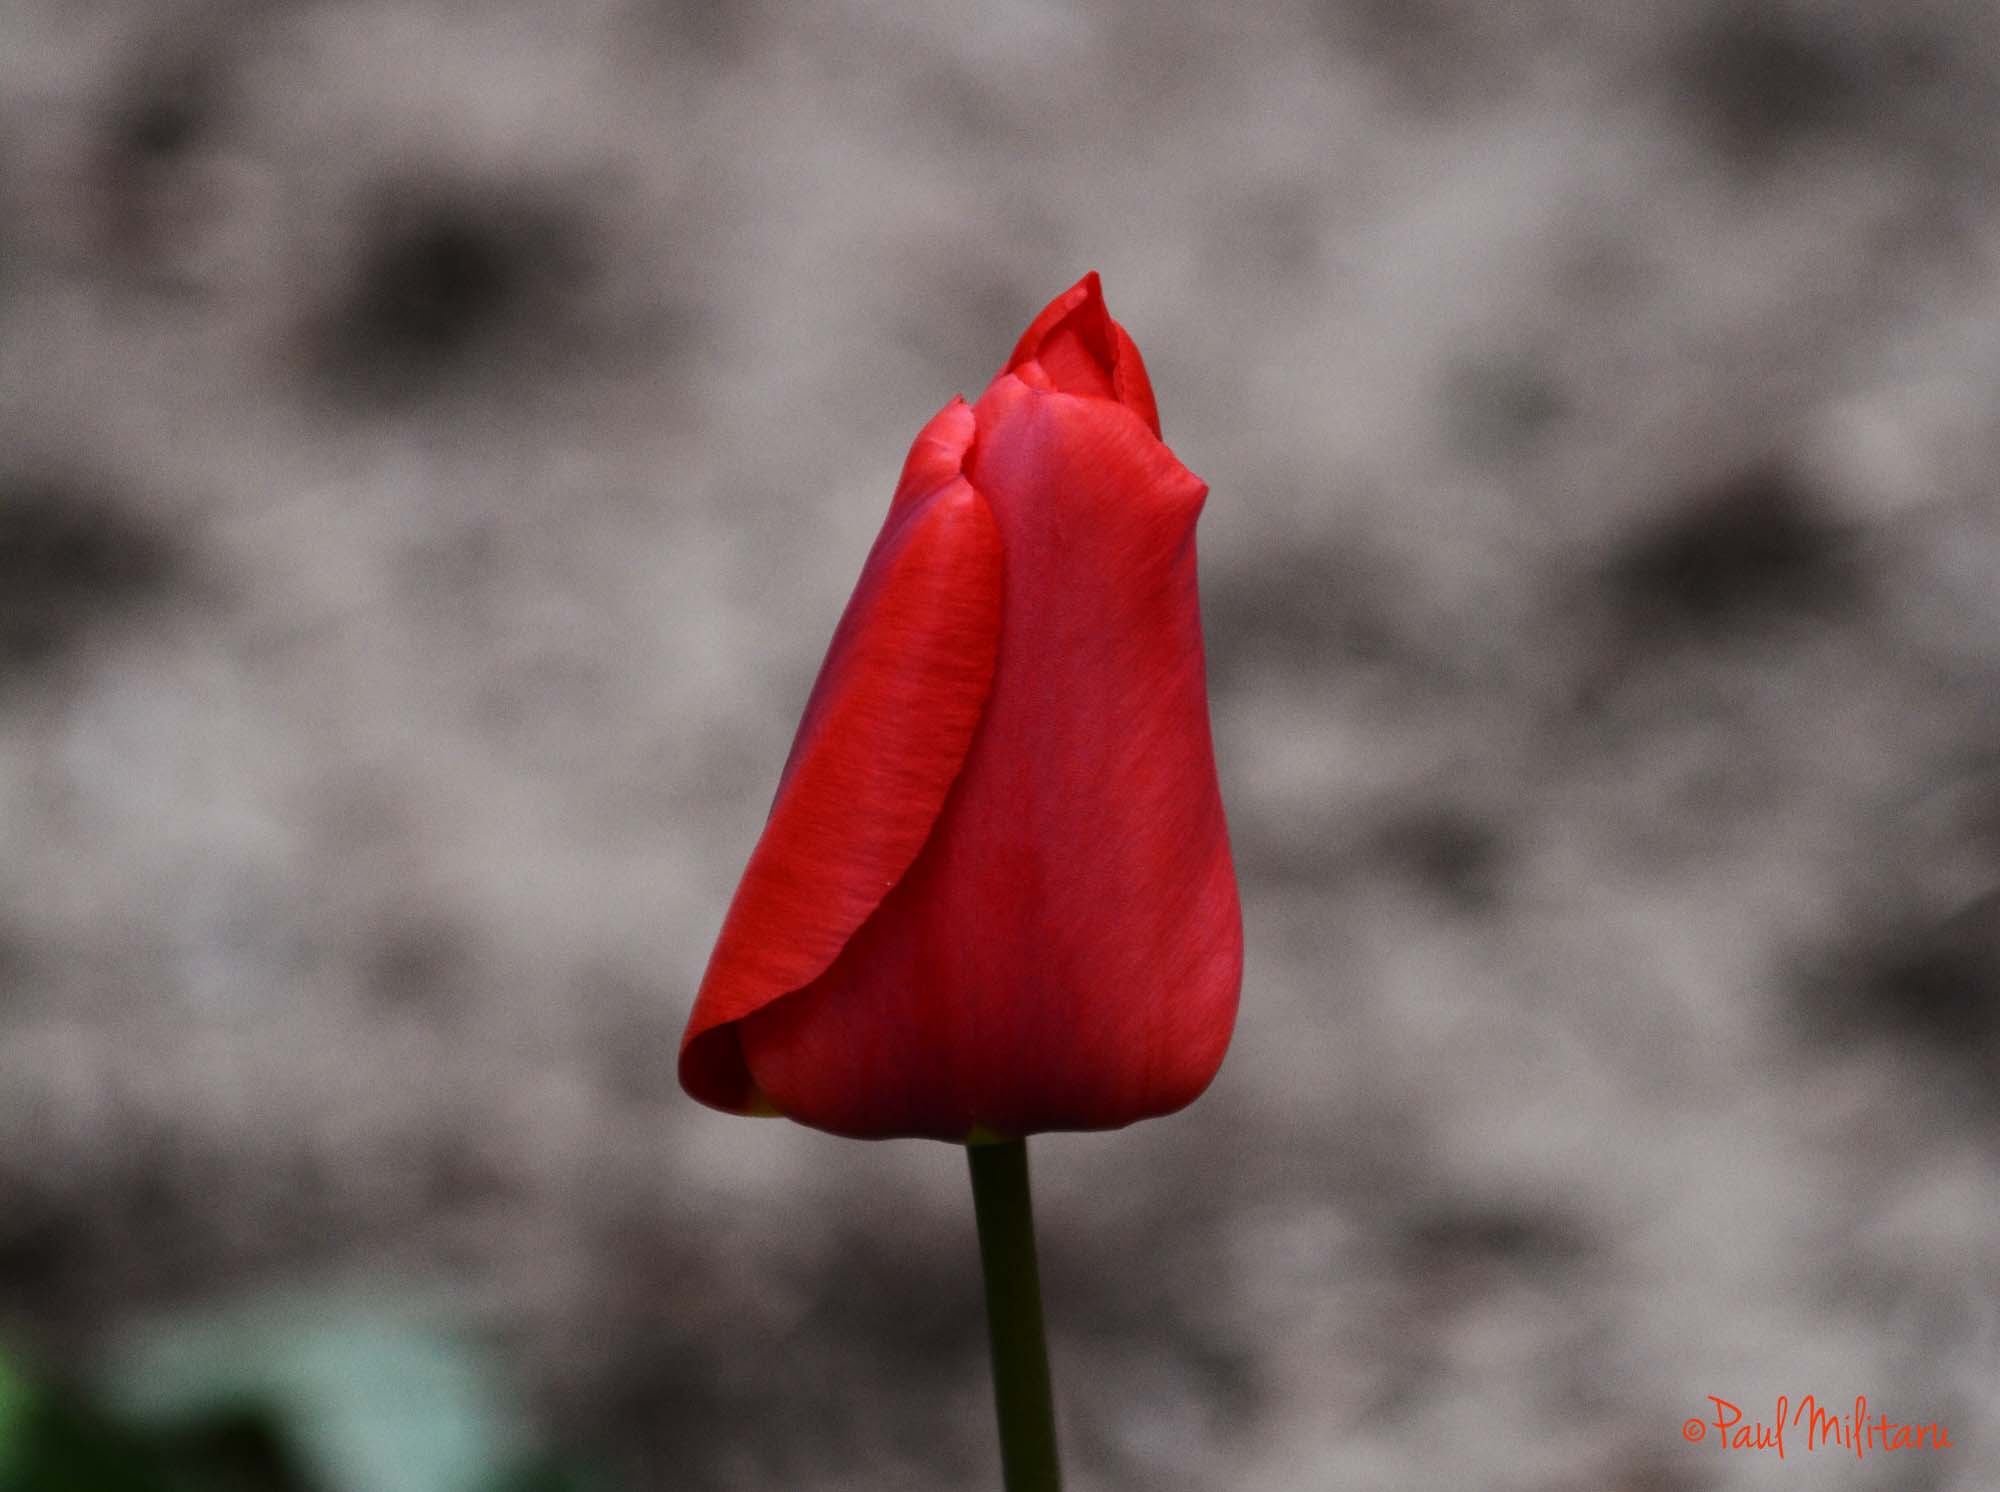 intense red tulip | Paul Militaru